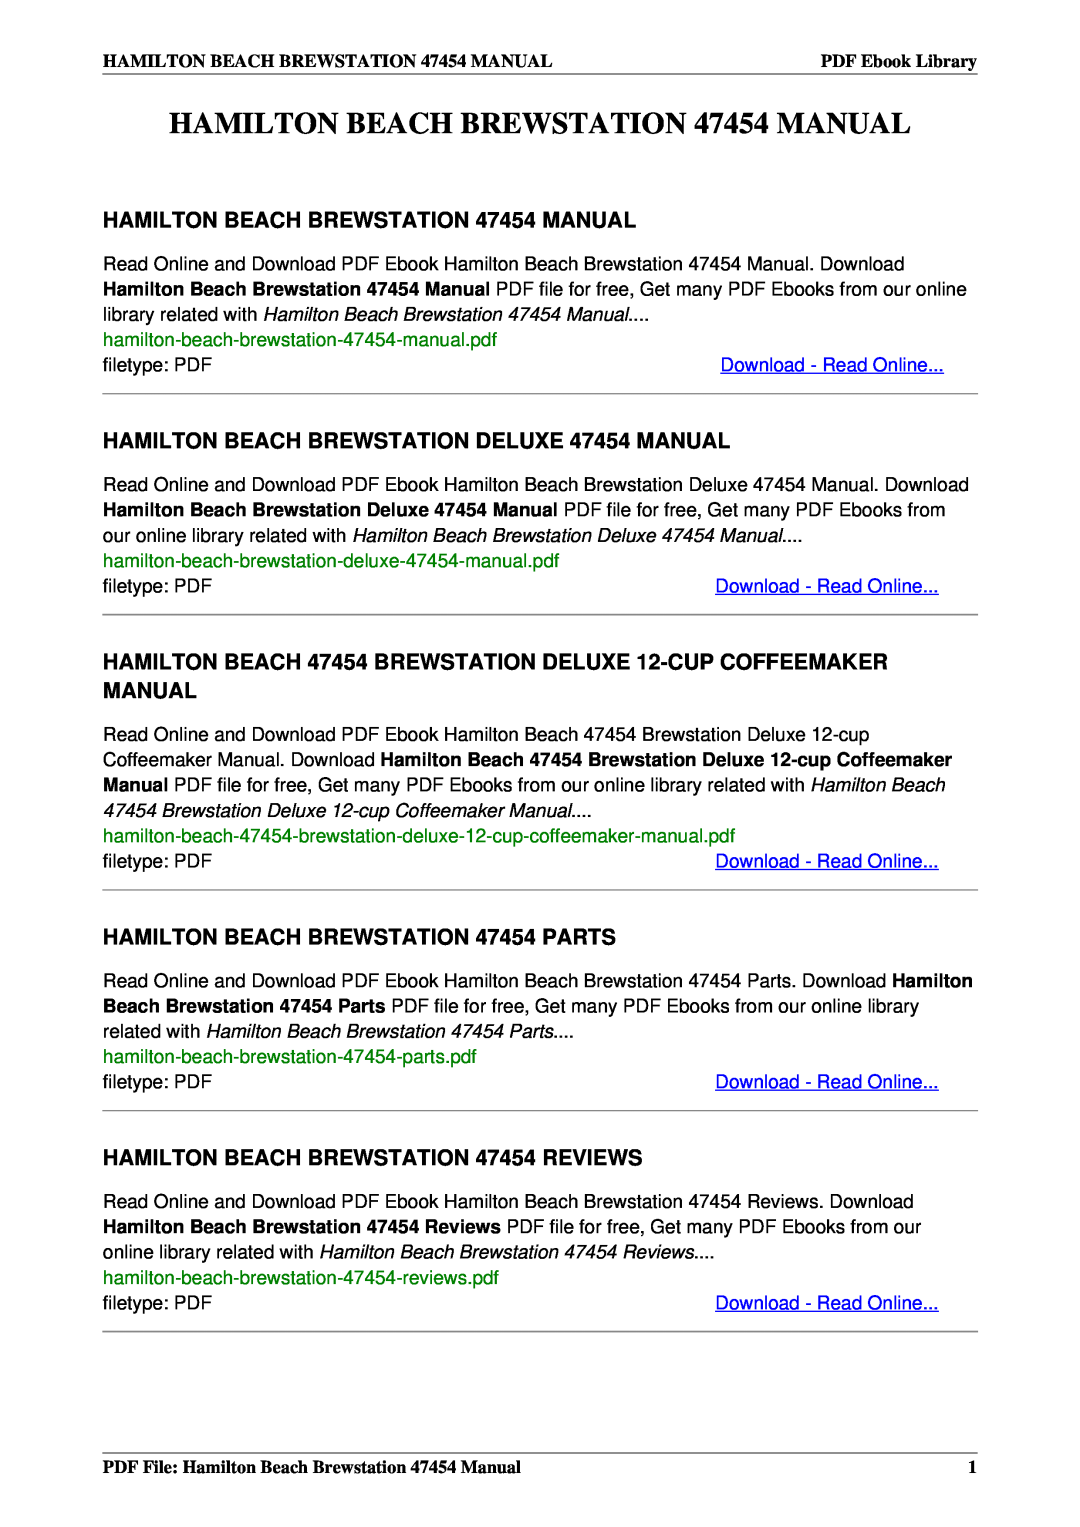 Hamilton Beach manual HAMILTON BEACH BREWSTATION 47454 MANUAL, HAMILTON BEACH BREWSTATION DELUXE 47454 MANUAL 